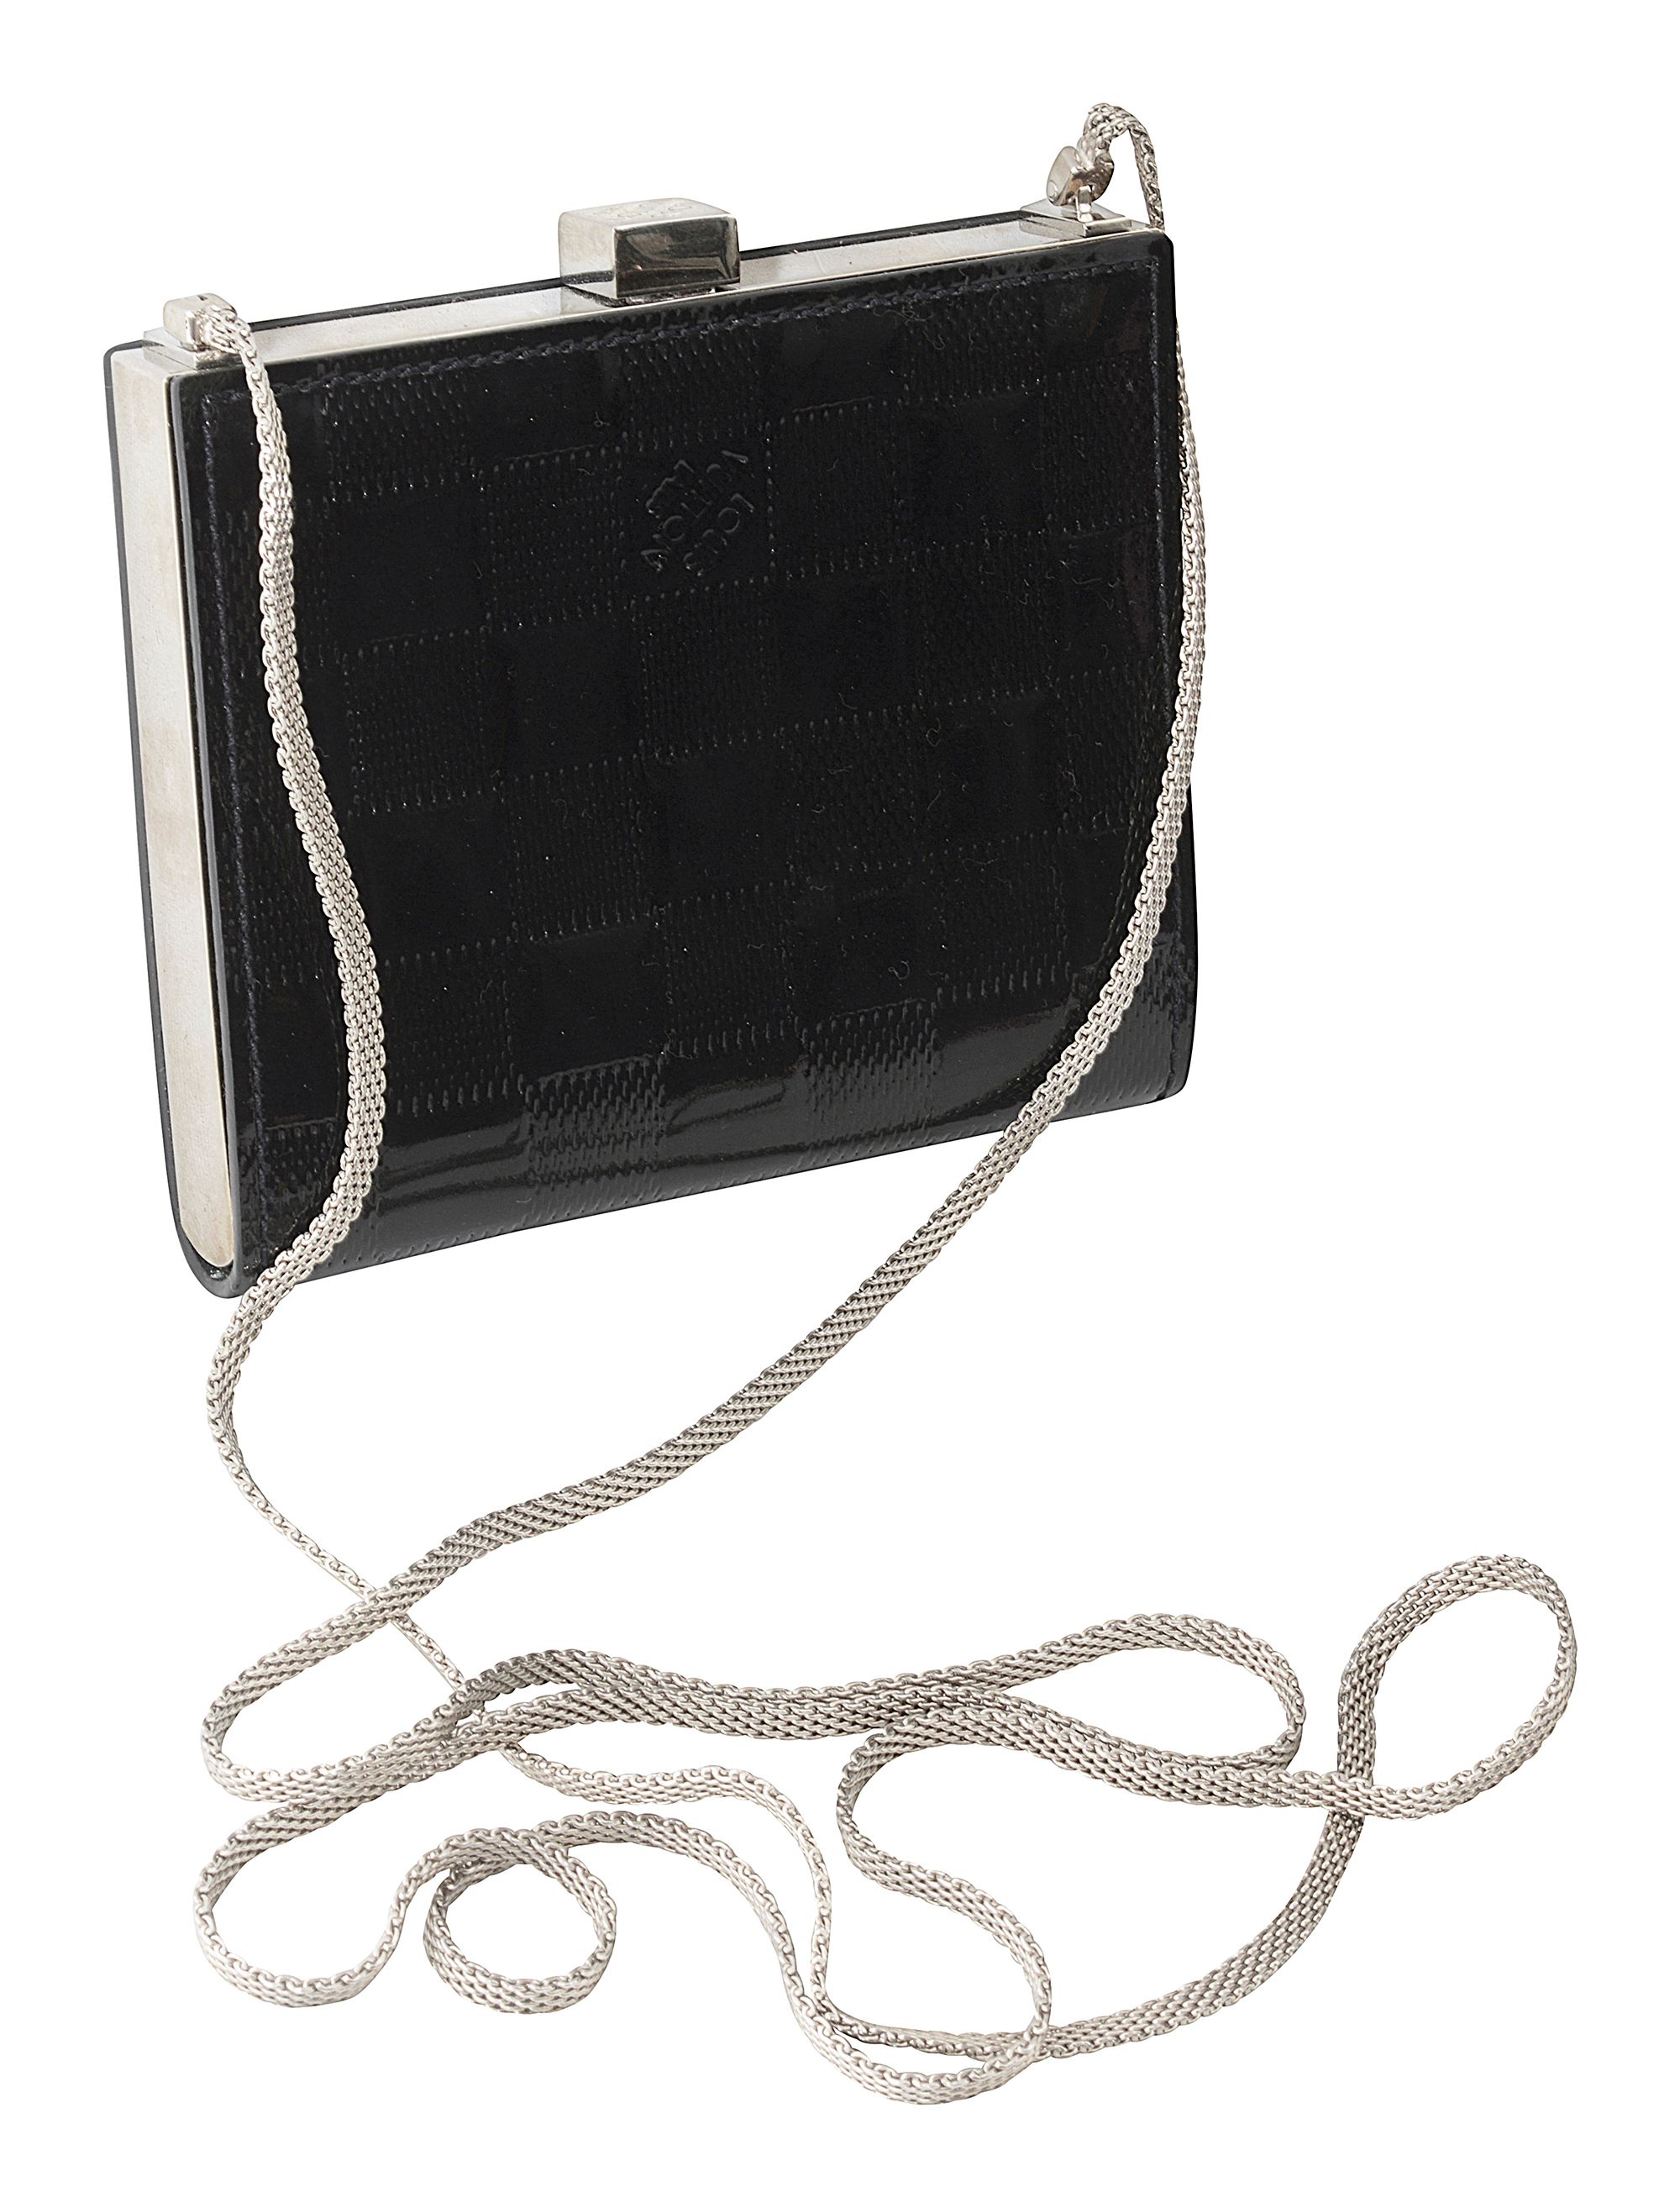 A Louis Vuitton evening bag - Image 4 of 4